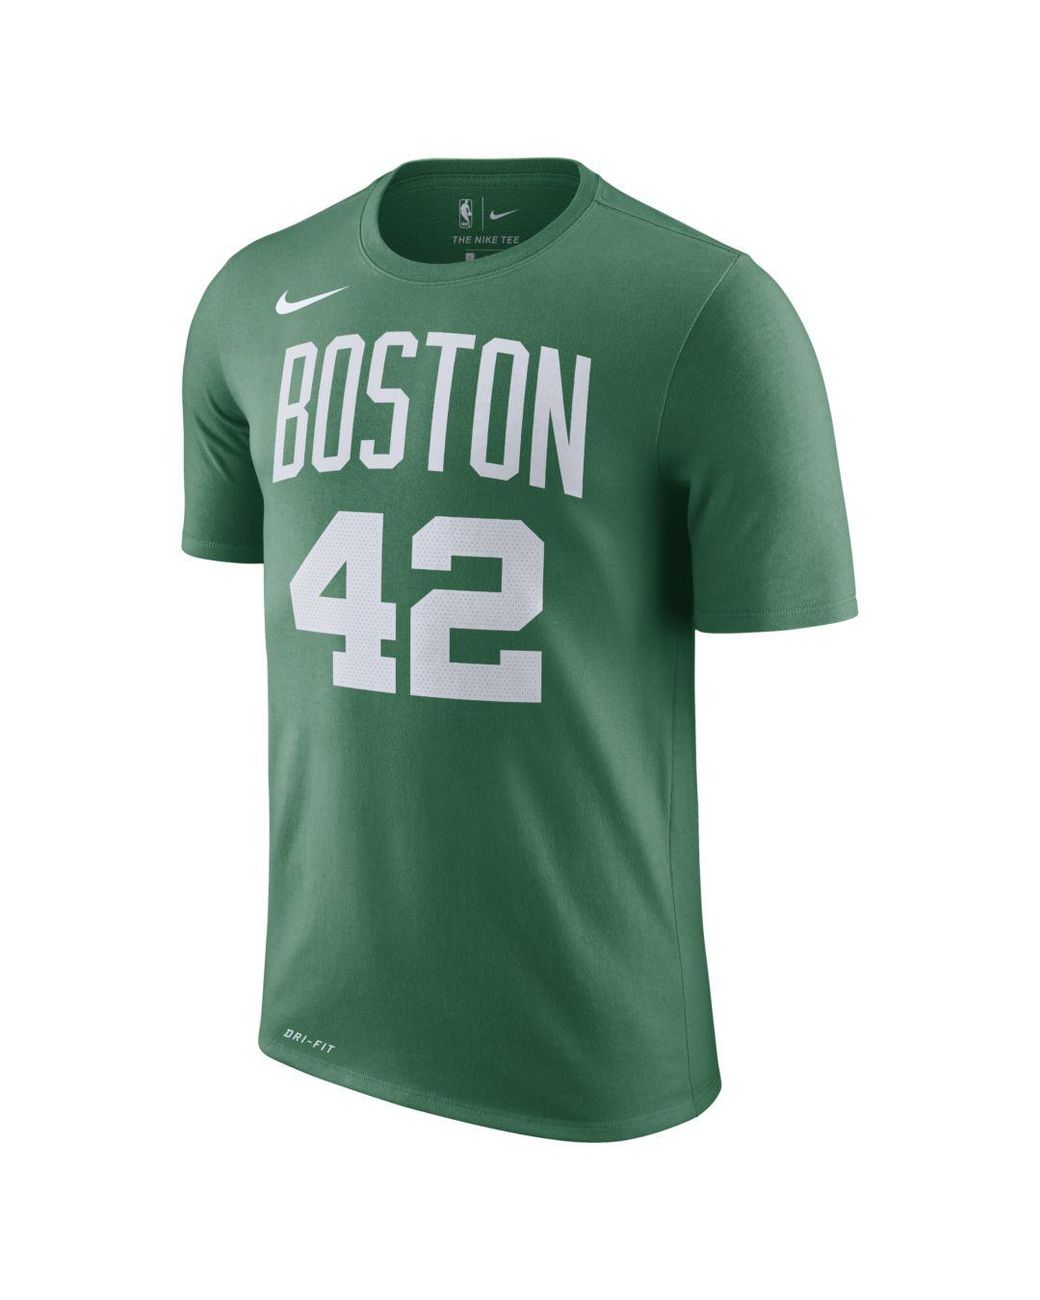 Nike Al Horford Boston Celtics Dri-fit Nba T-shirt in Green for Men - Lyst